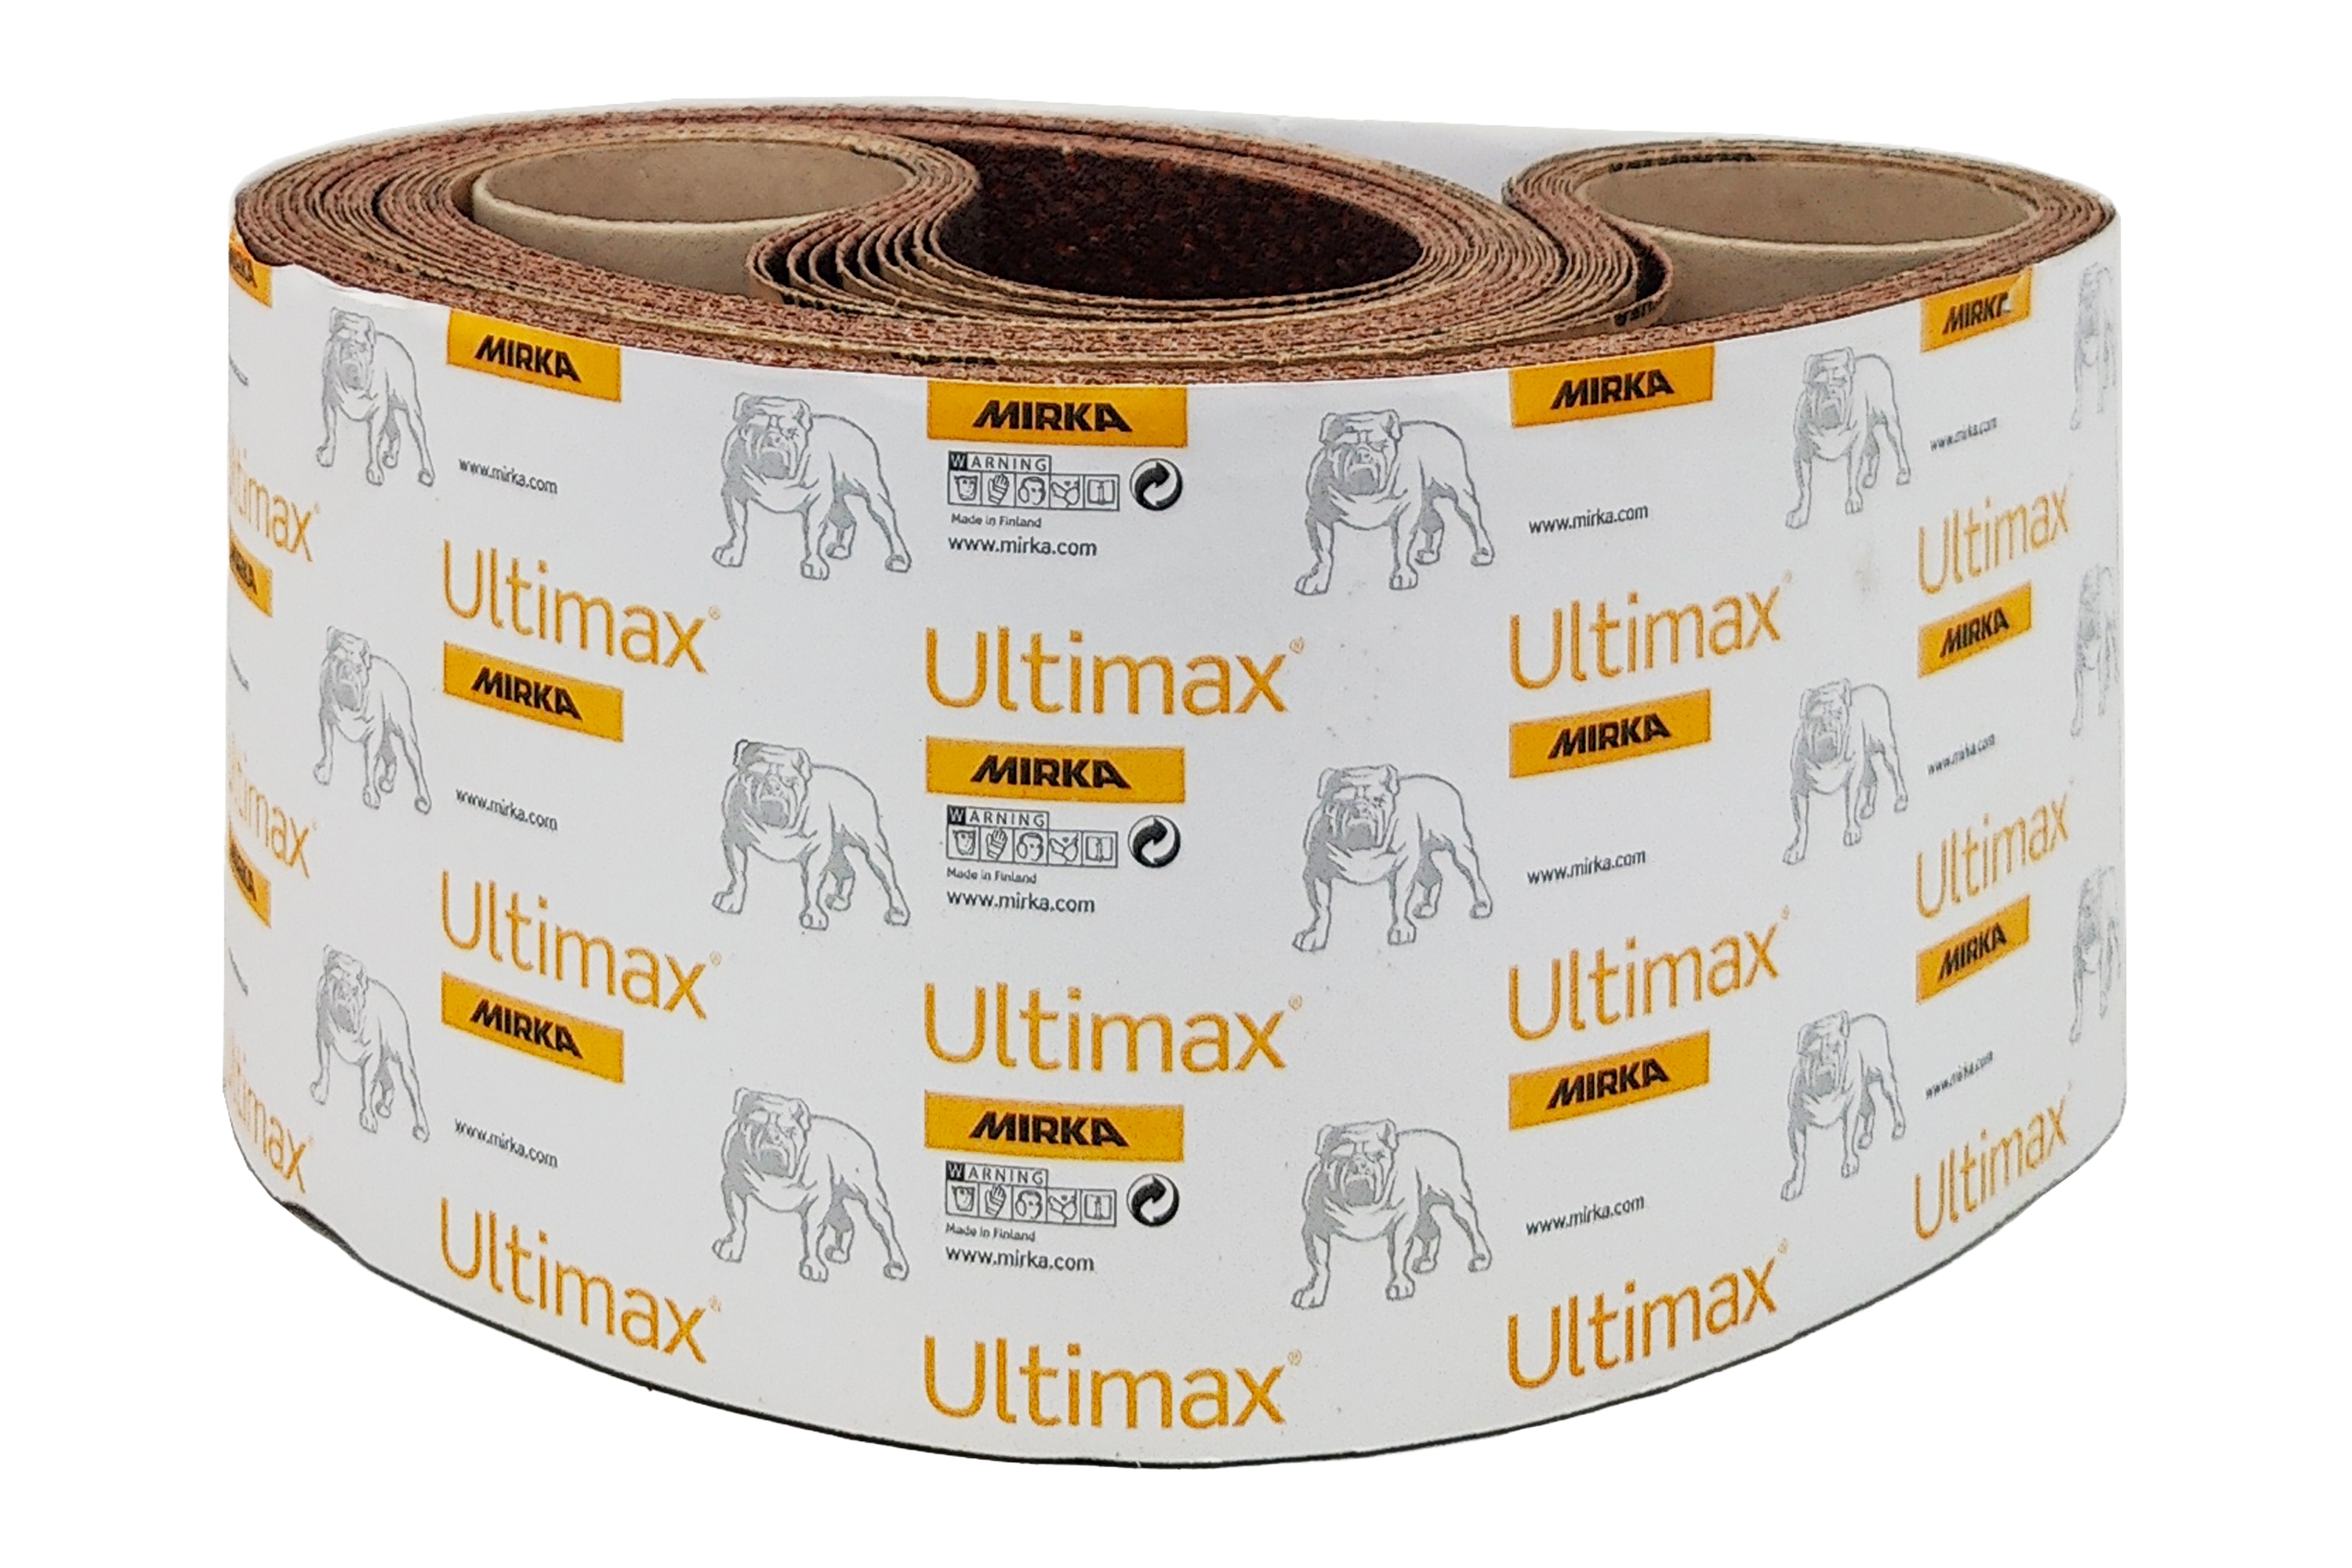 Abbildung Mirka Ultimax 150x2280mm mit Verpackung.